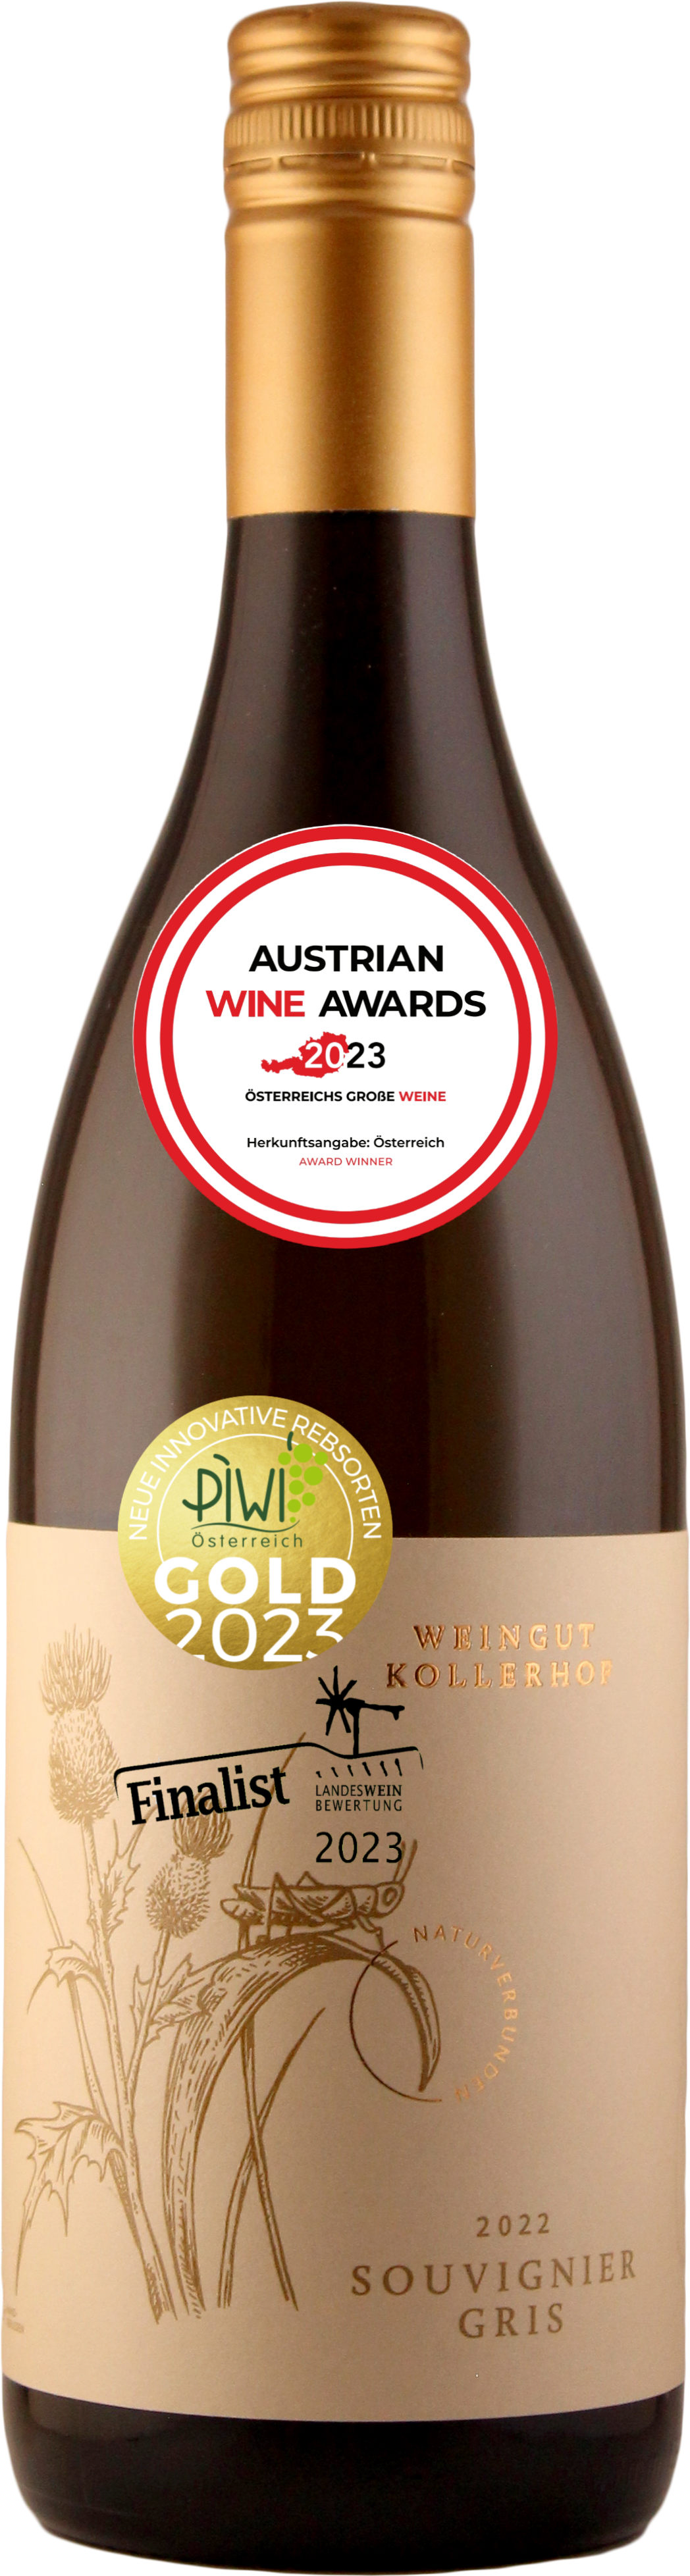 PIWI SOUVIGNIER GRIS 2022 Austrian WINE Awards SIEGER